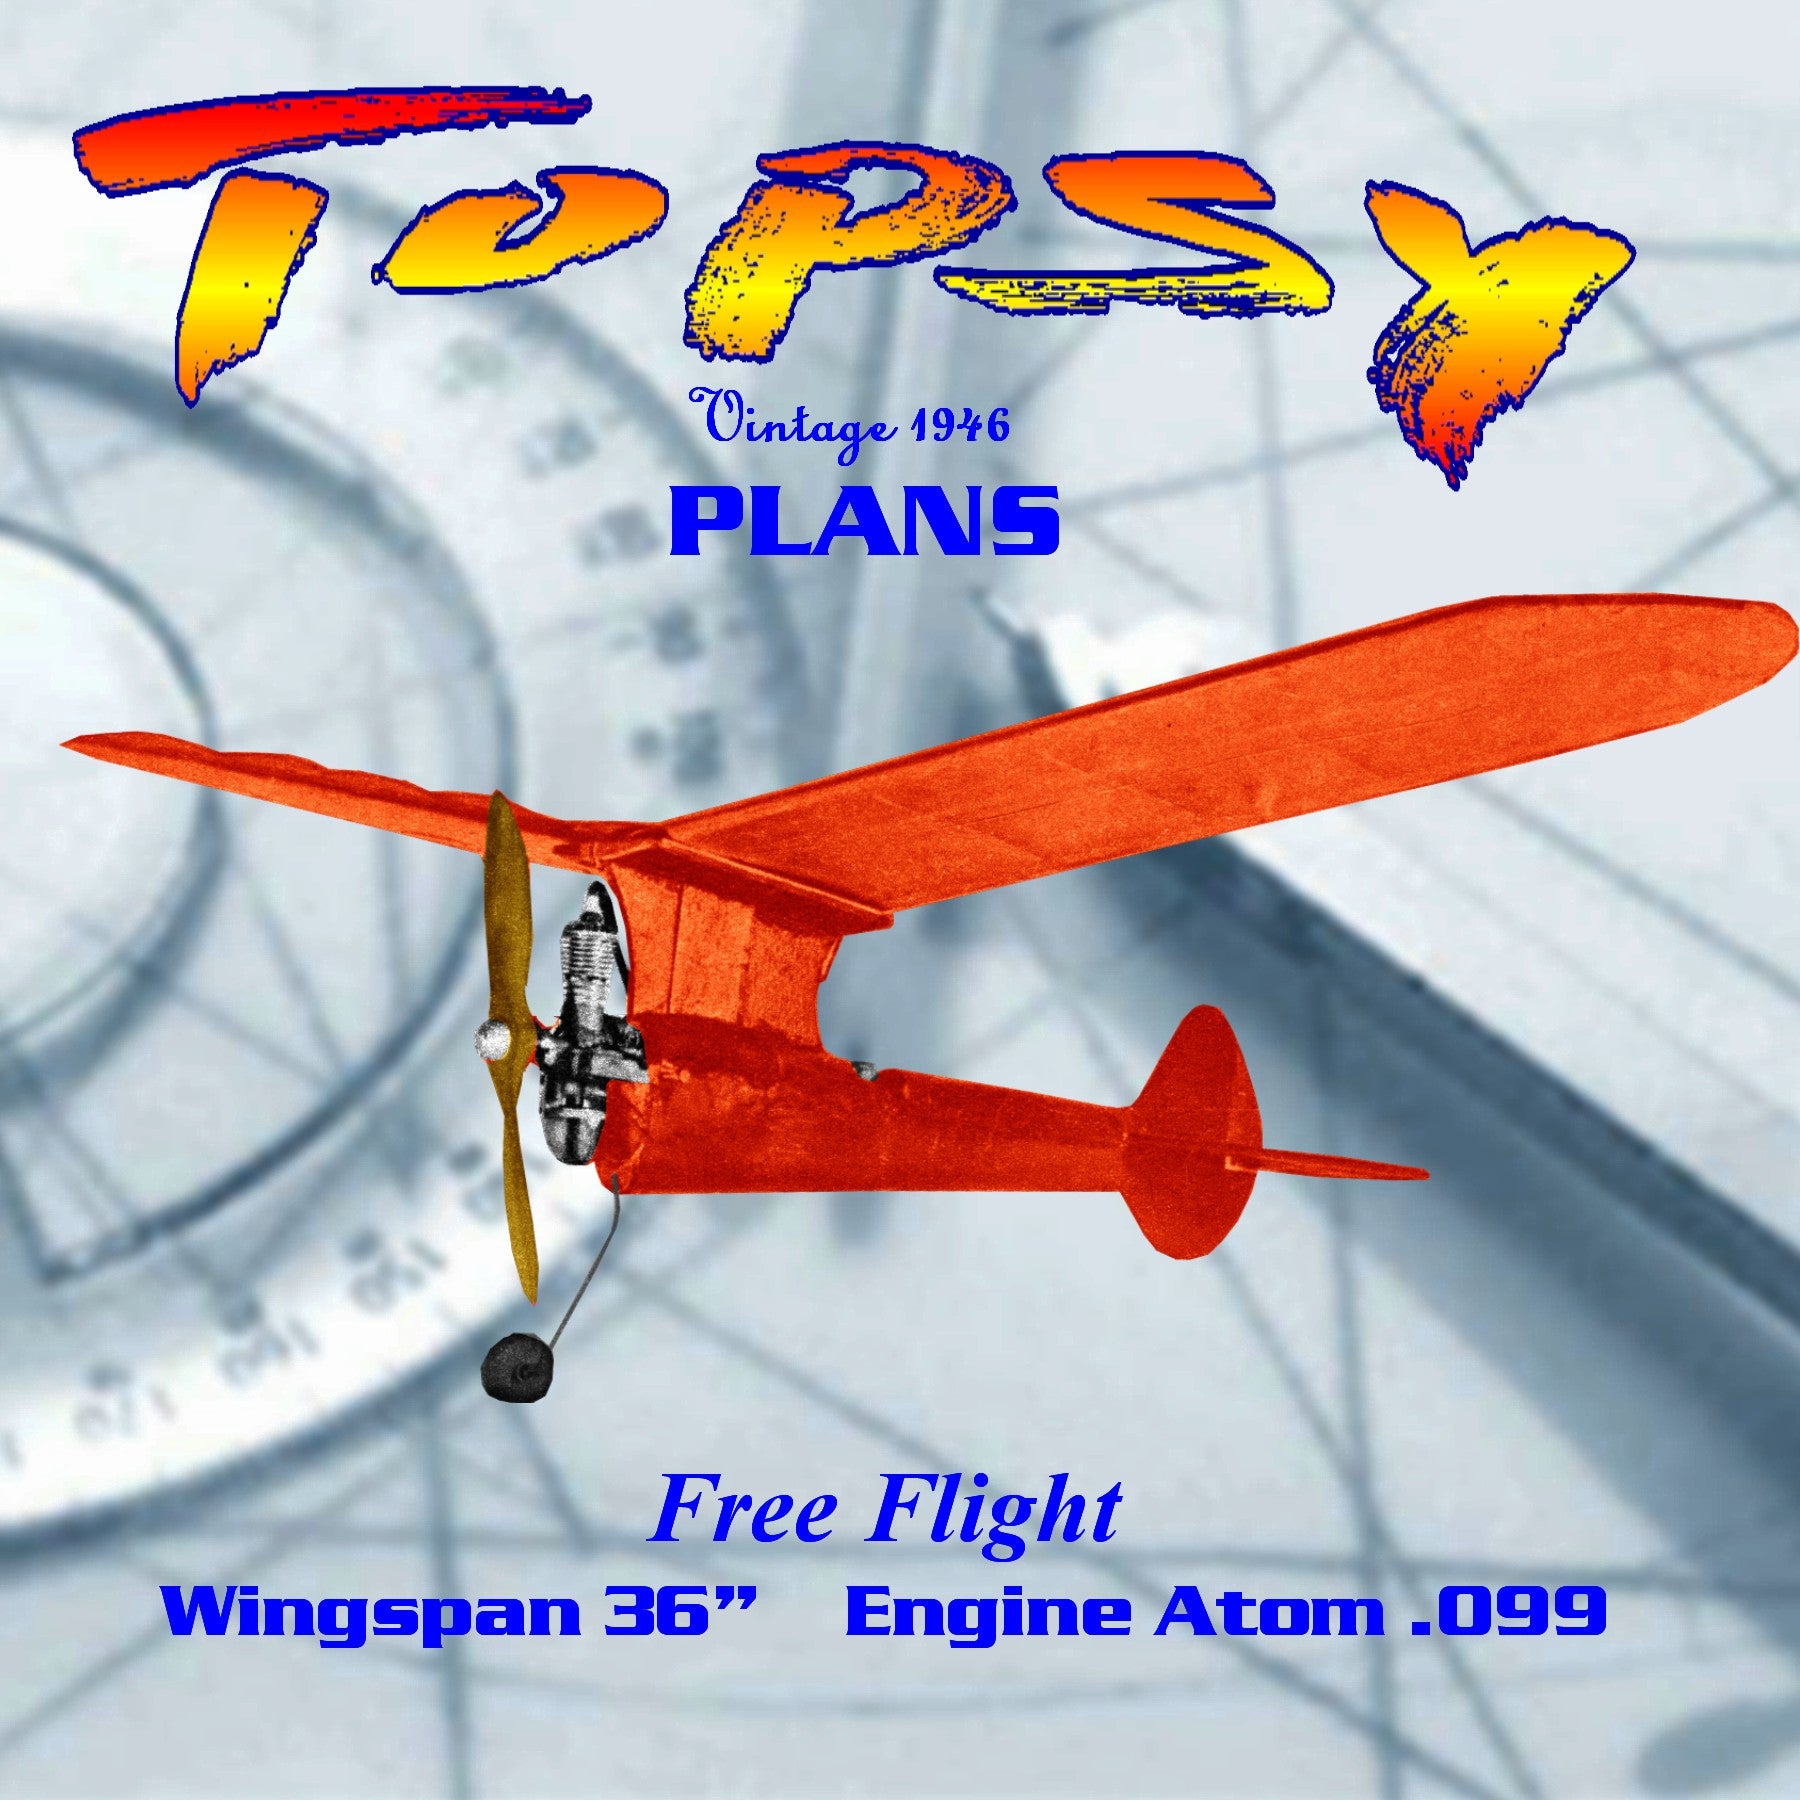 full size printed plan from 1946 free flight "topsy" wingspan 36”  original engine atom .099